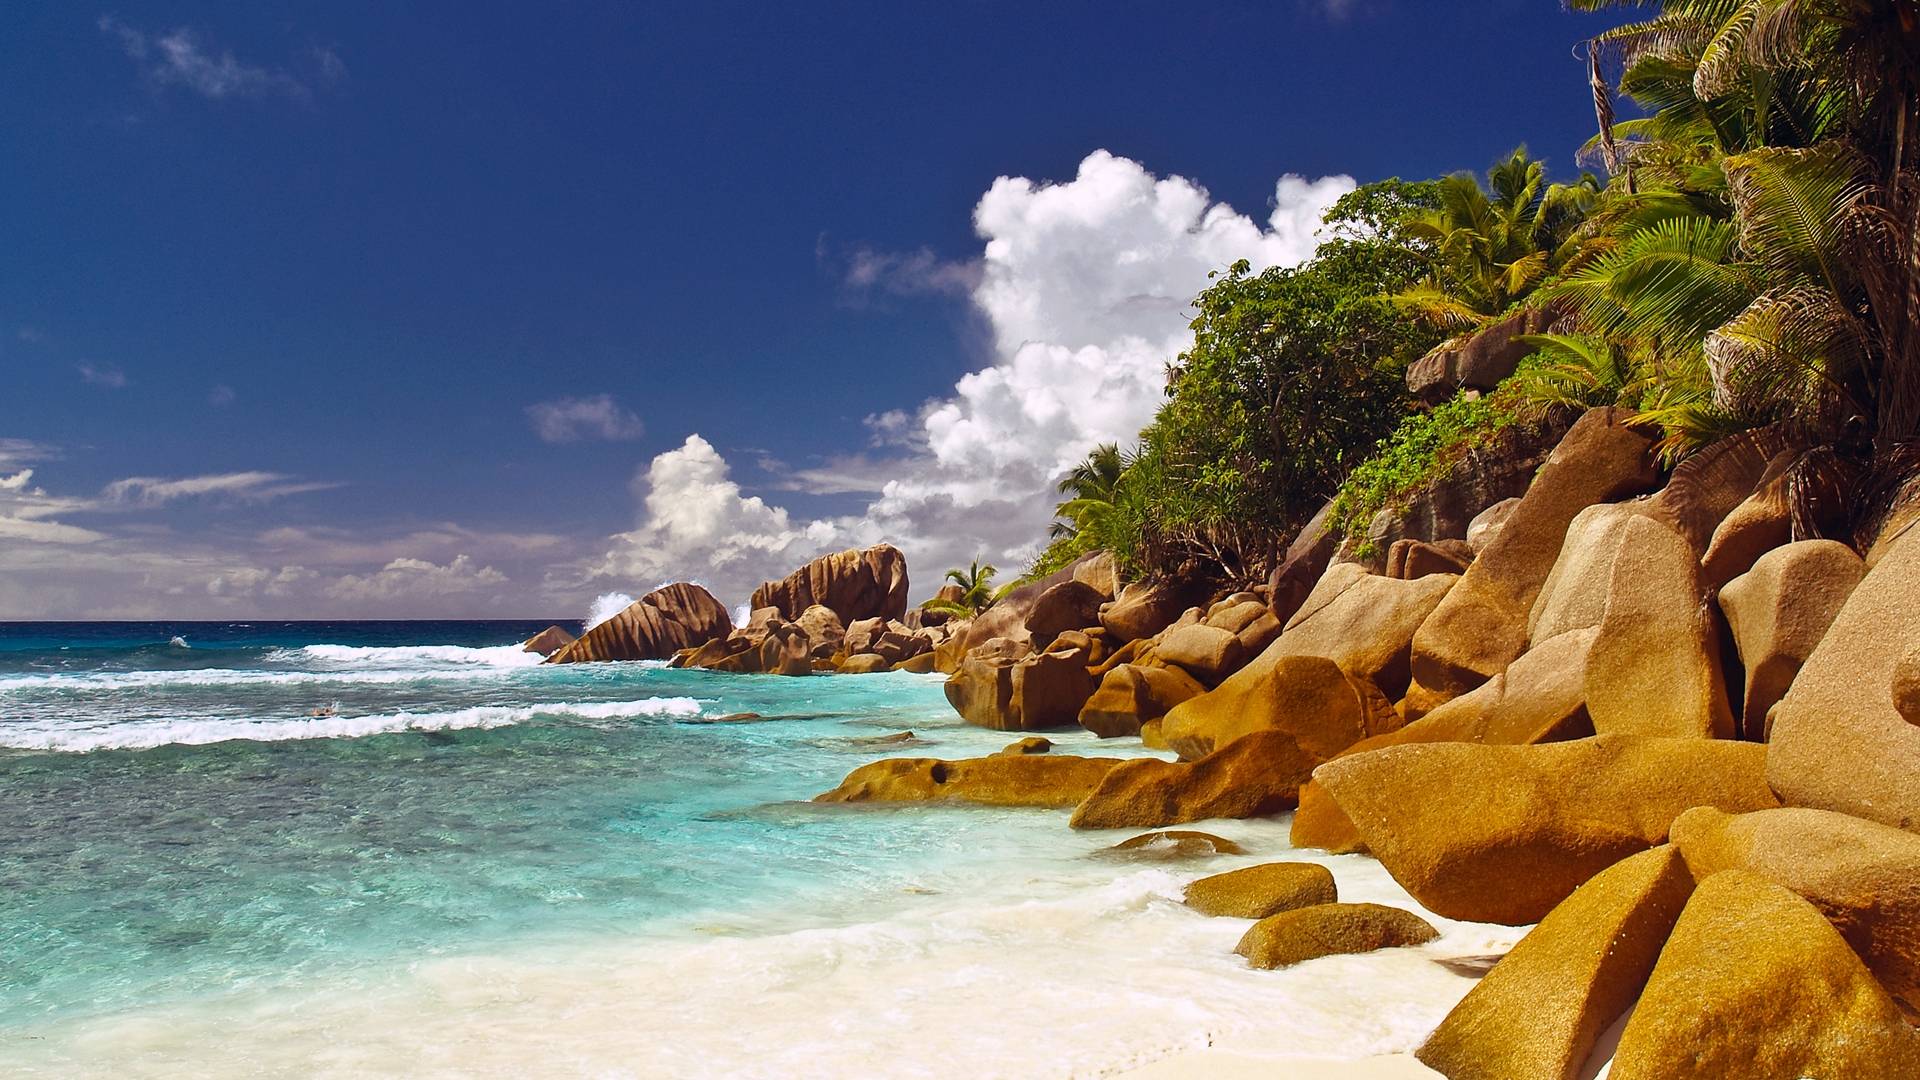 Seychelles Islands Corner HD Wallpaper 1080P & Islands